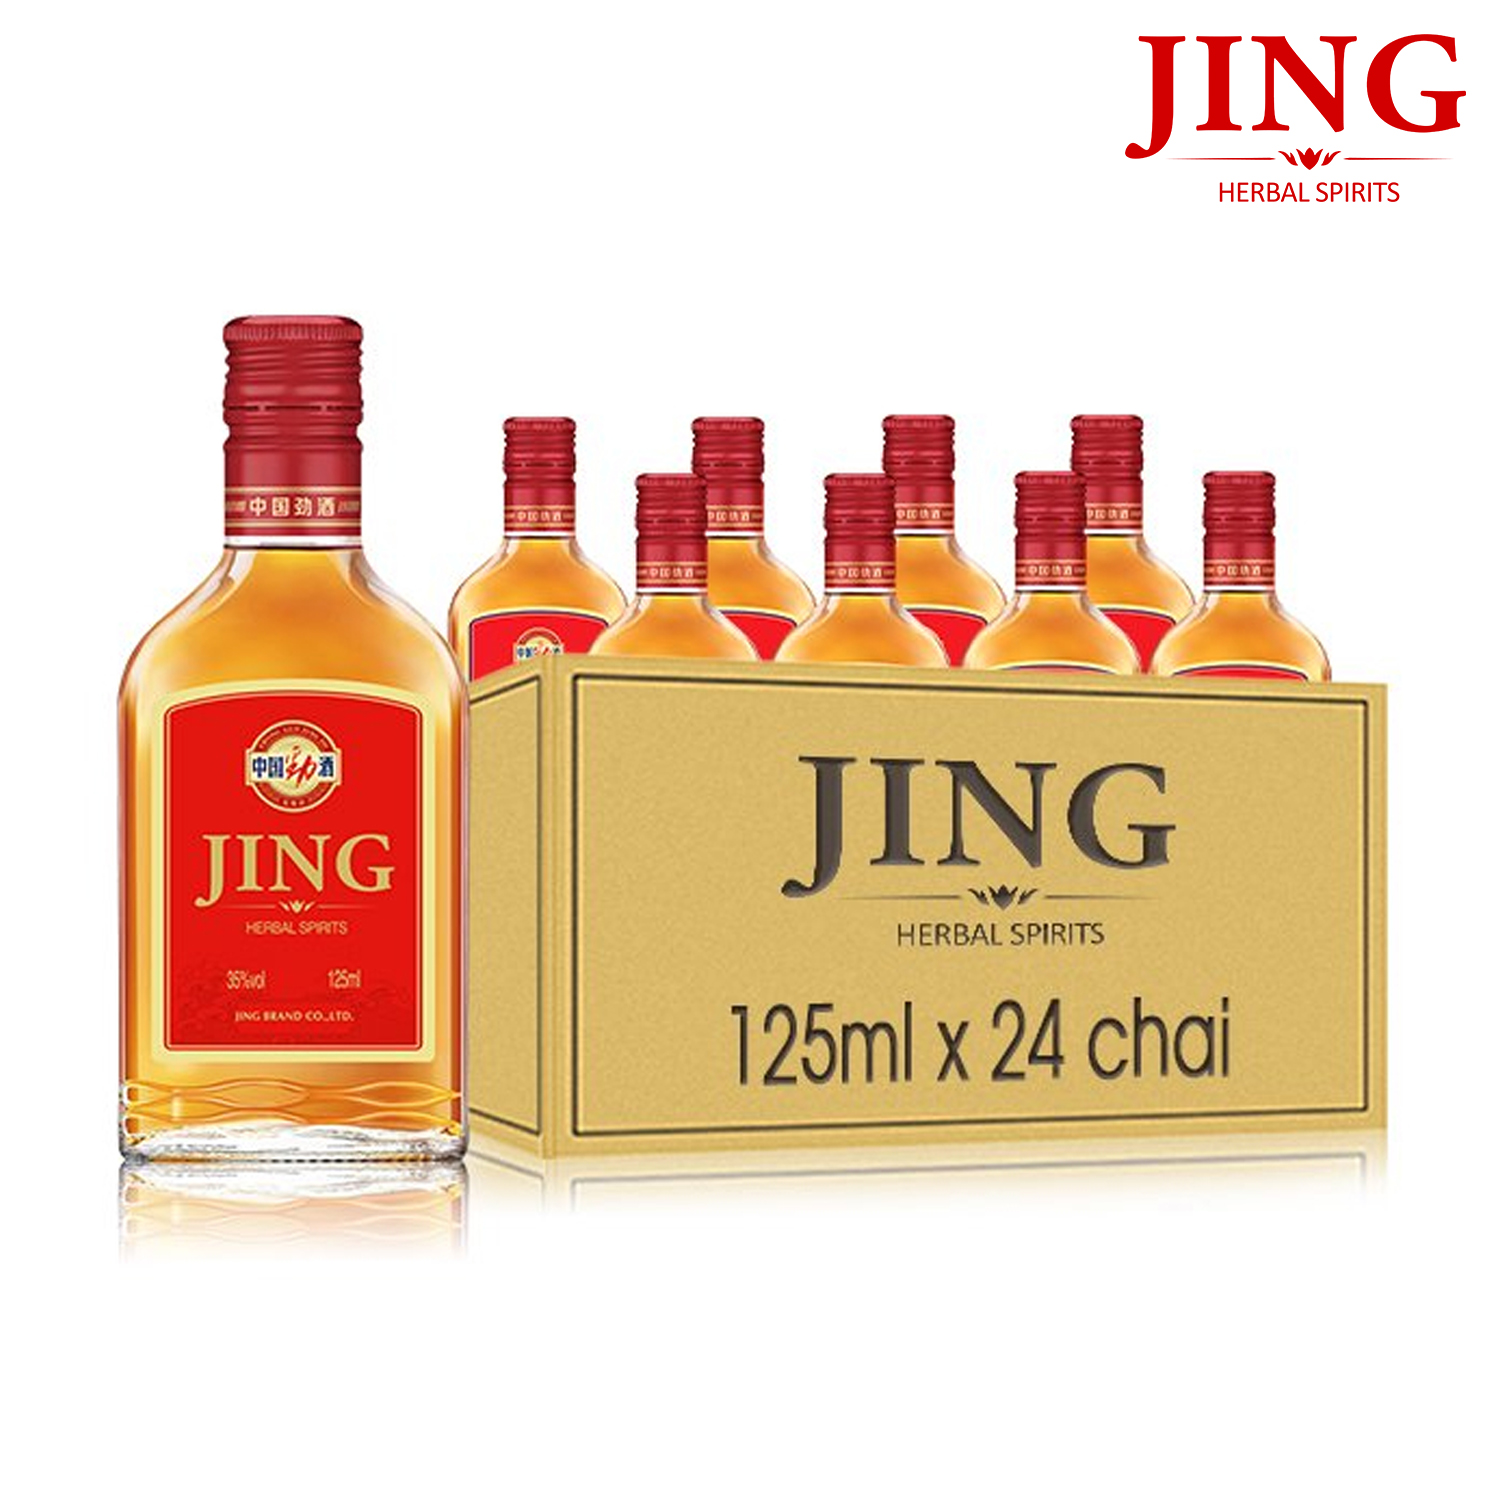 thung-ruou-jing-35-vol-125ml-24-chai